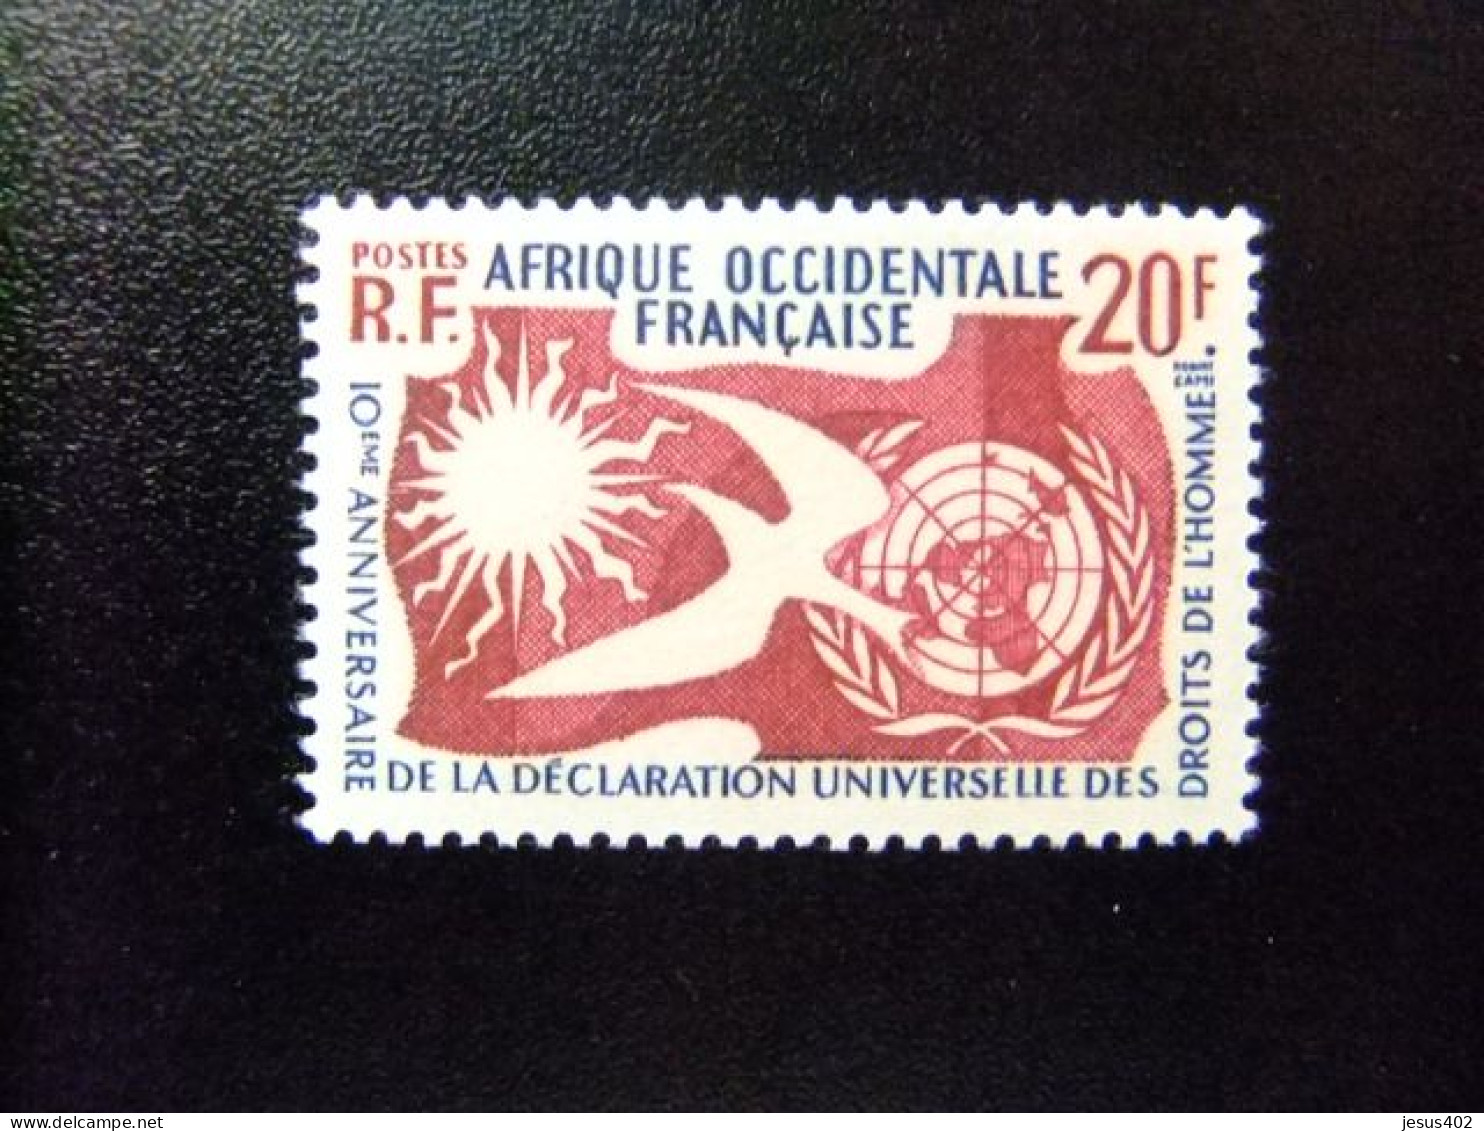 56 AFRIQUE OCCIDENTALE FRANCAISE (A.O.F.) 1958 / O.N.U. / YVERT 74 MNH - Ungebraucht